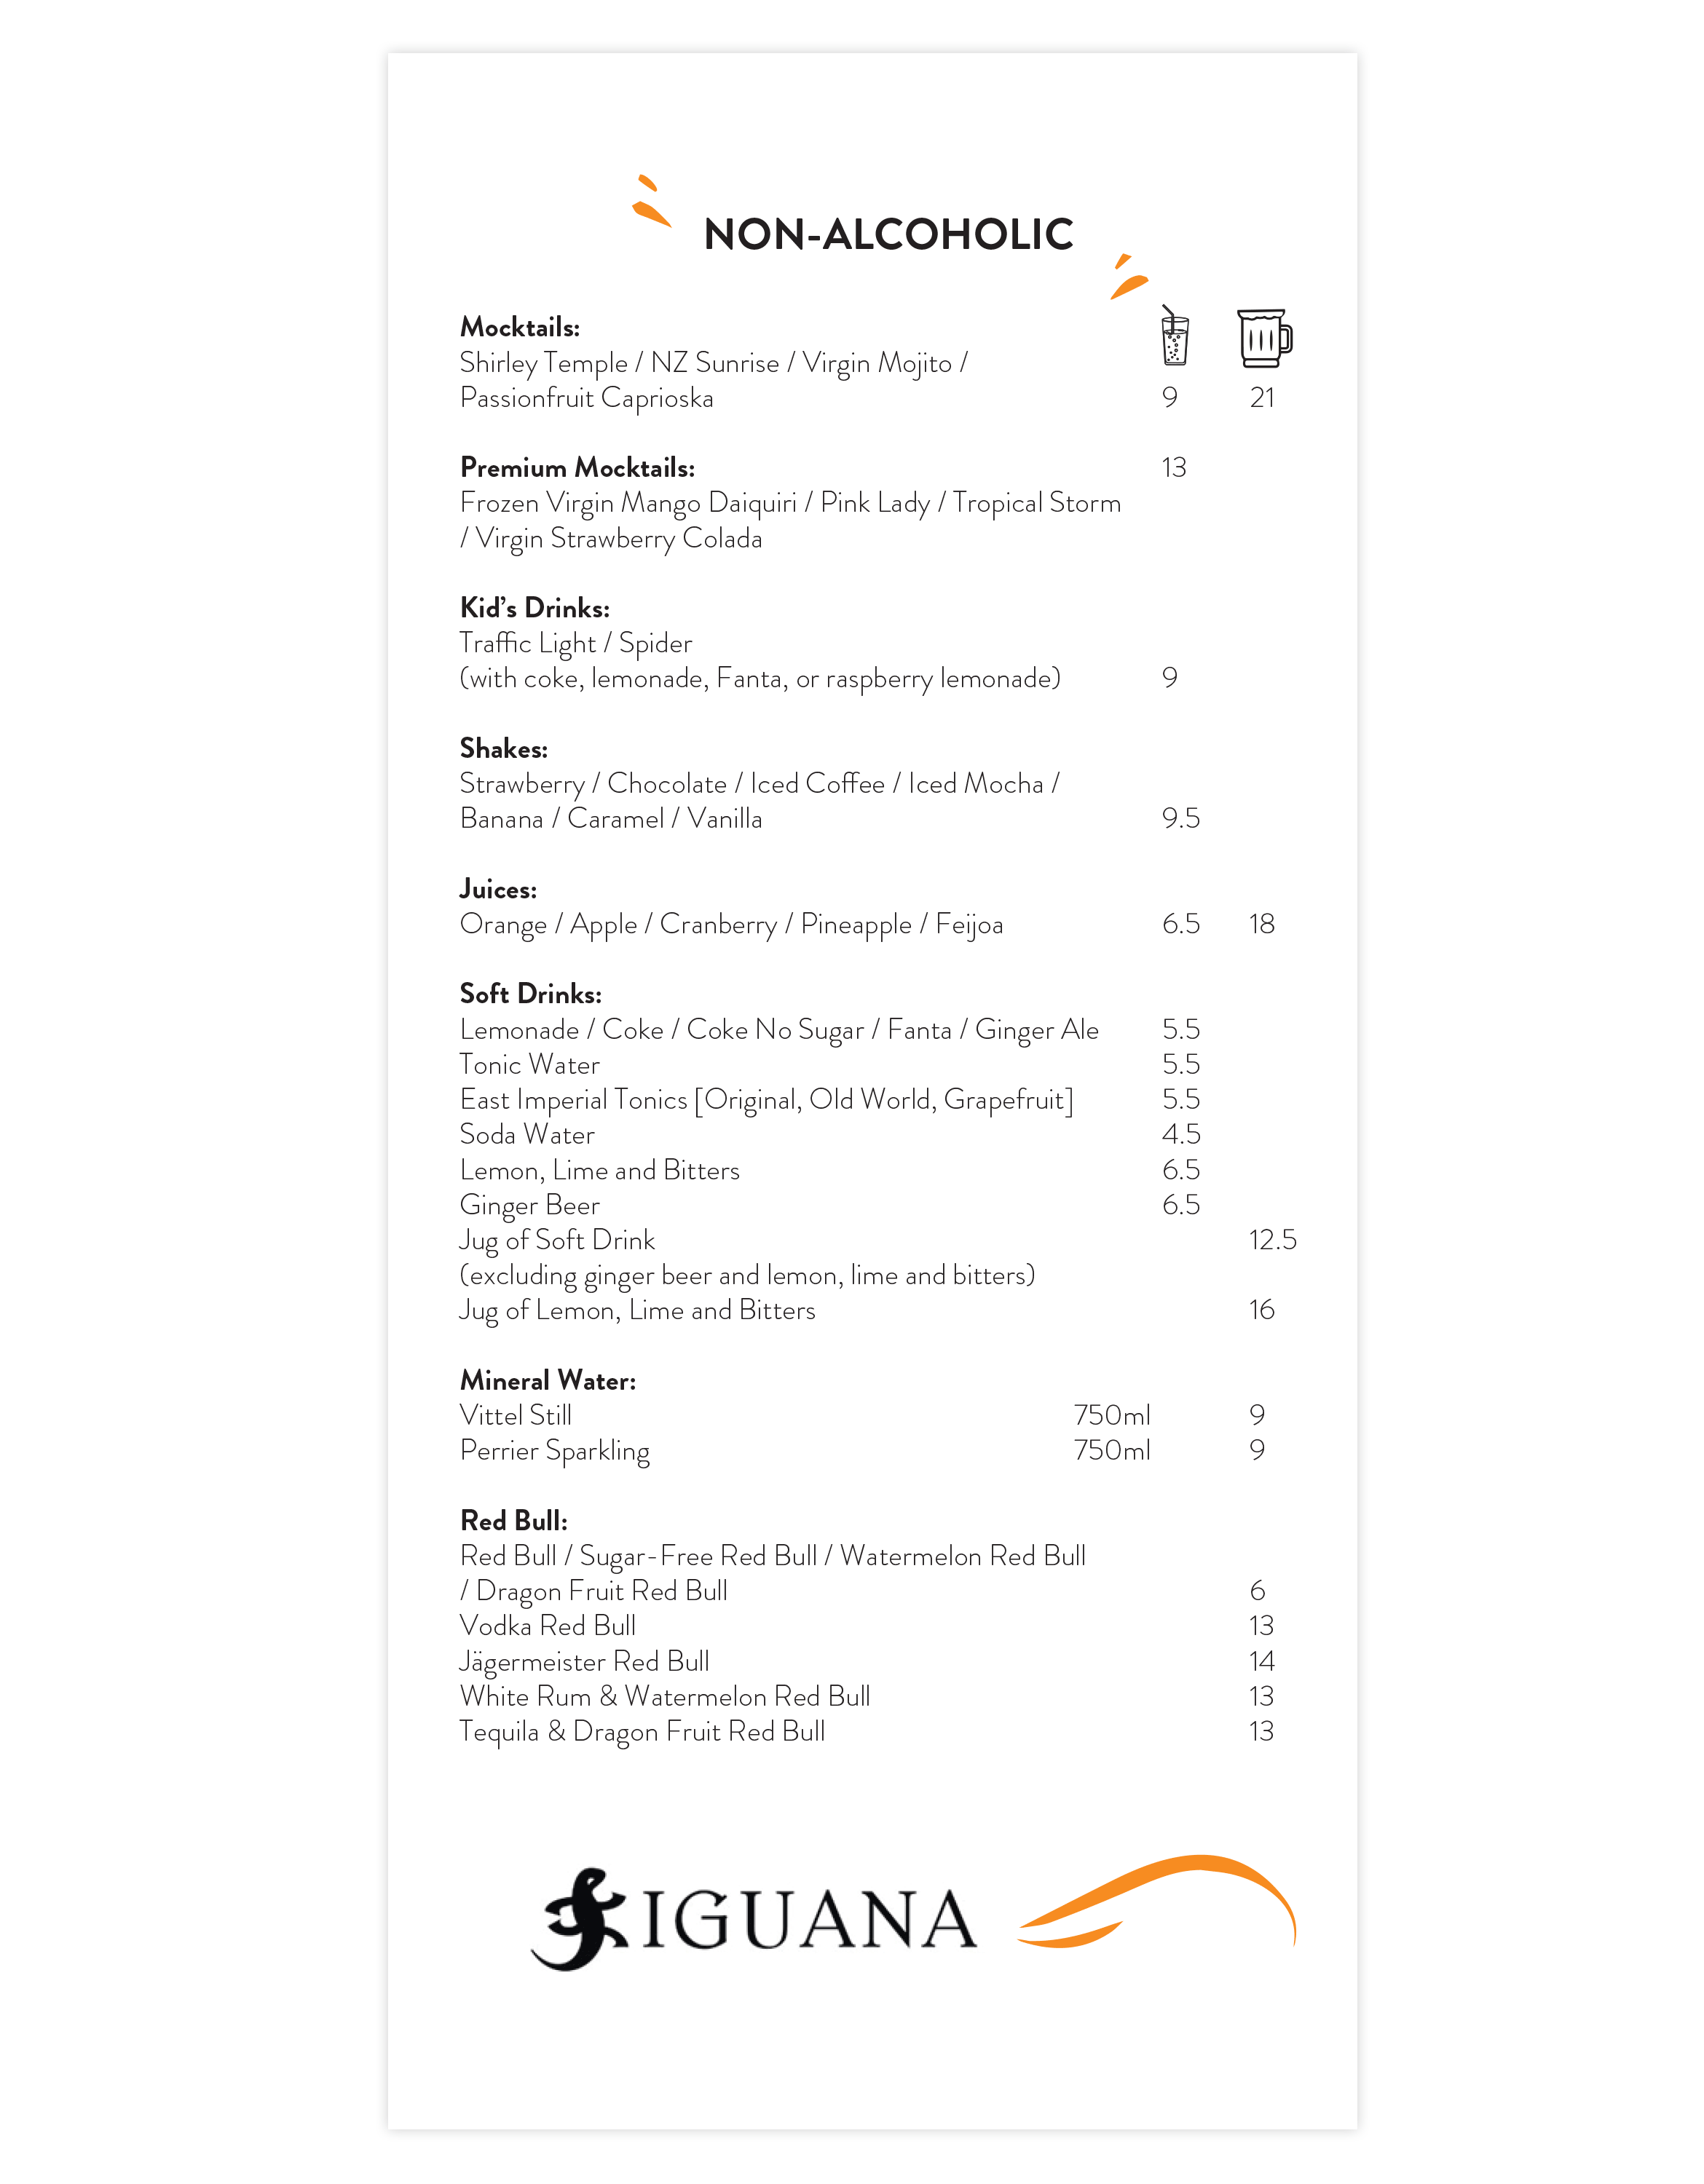 Iguana Drinks List – Non-alcoholic